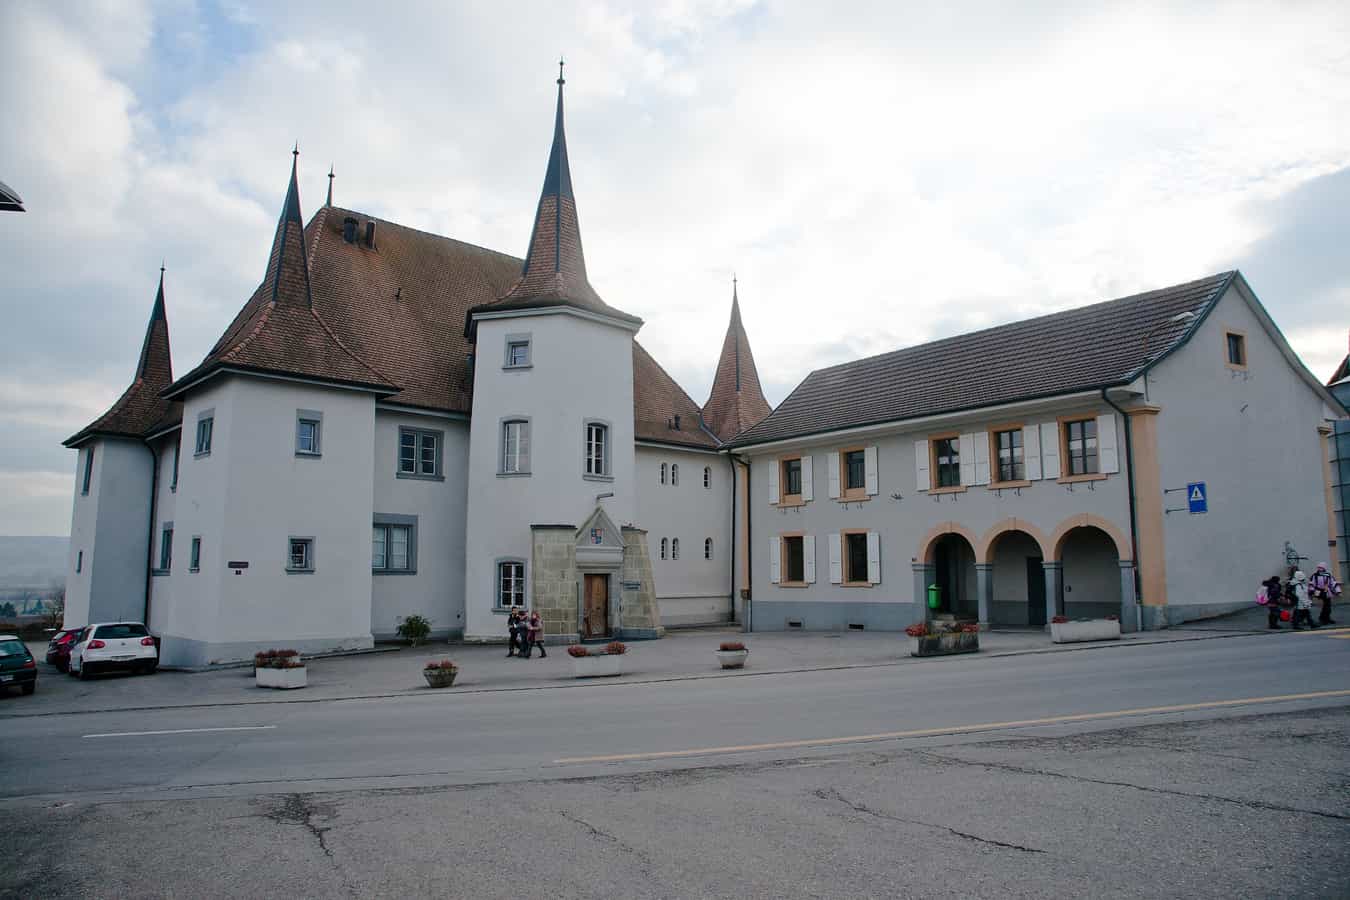 Saint-Aubin (FR), administration communale